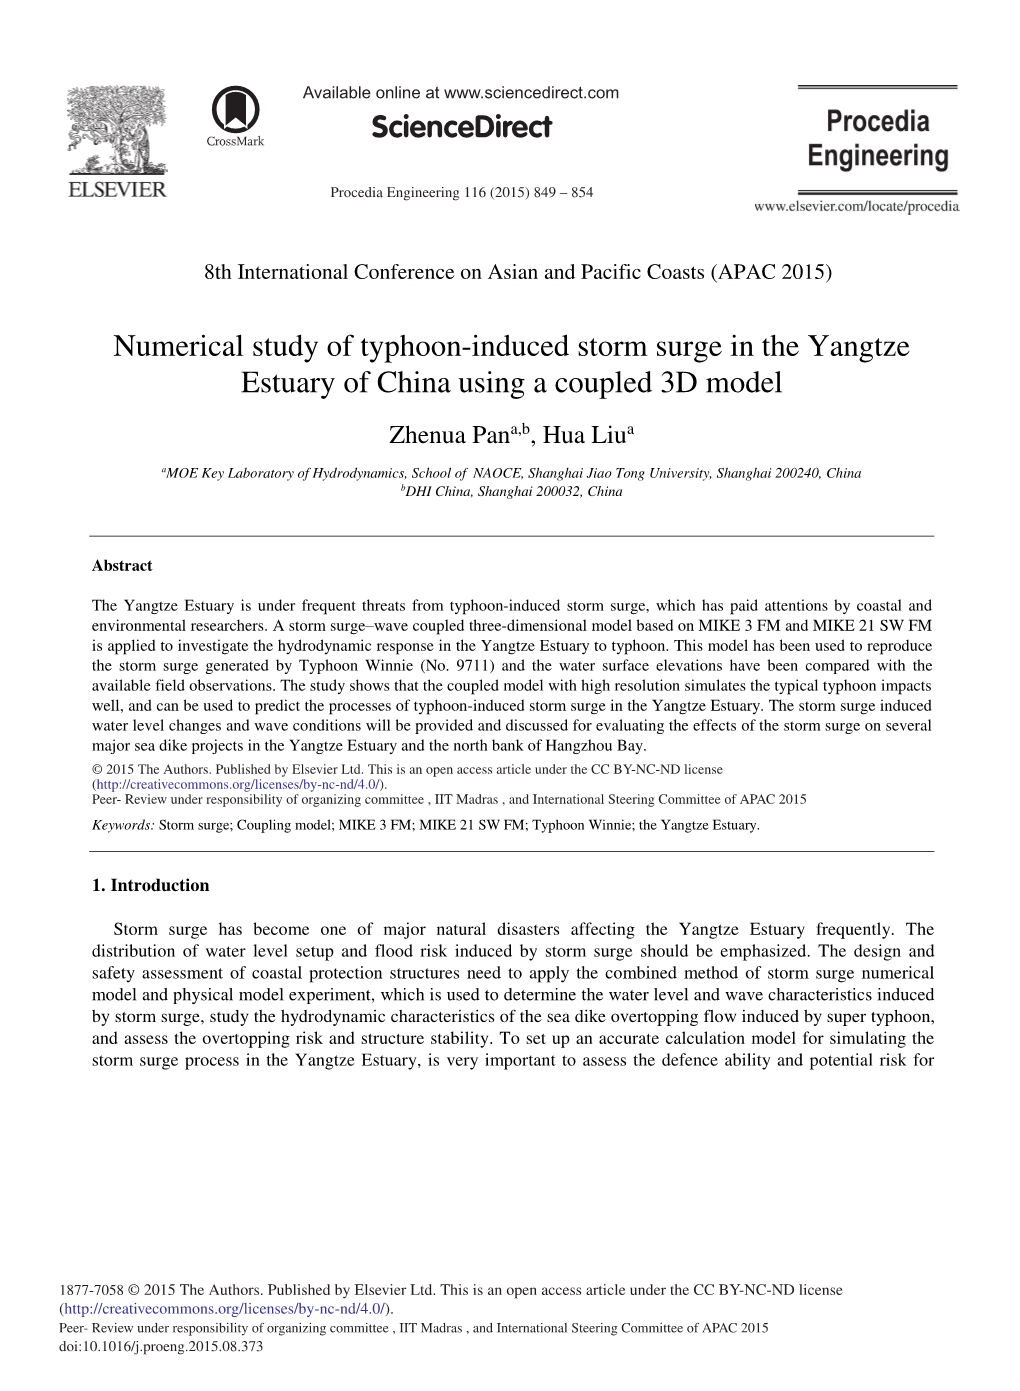 Numerical Study of Typhoon-Induced Storm Surge in the Yangtze Estuary of China Using a Coupled 3D Model Zhenua Pana,B, Hua Liua